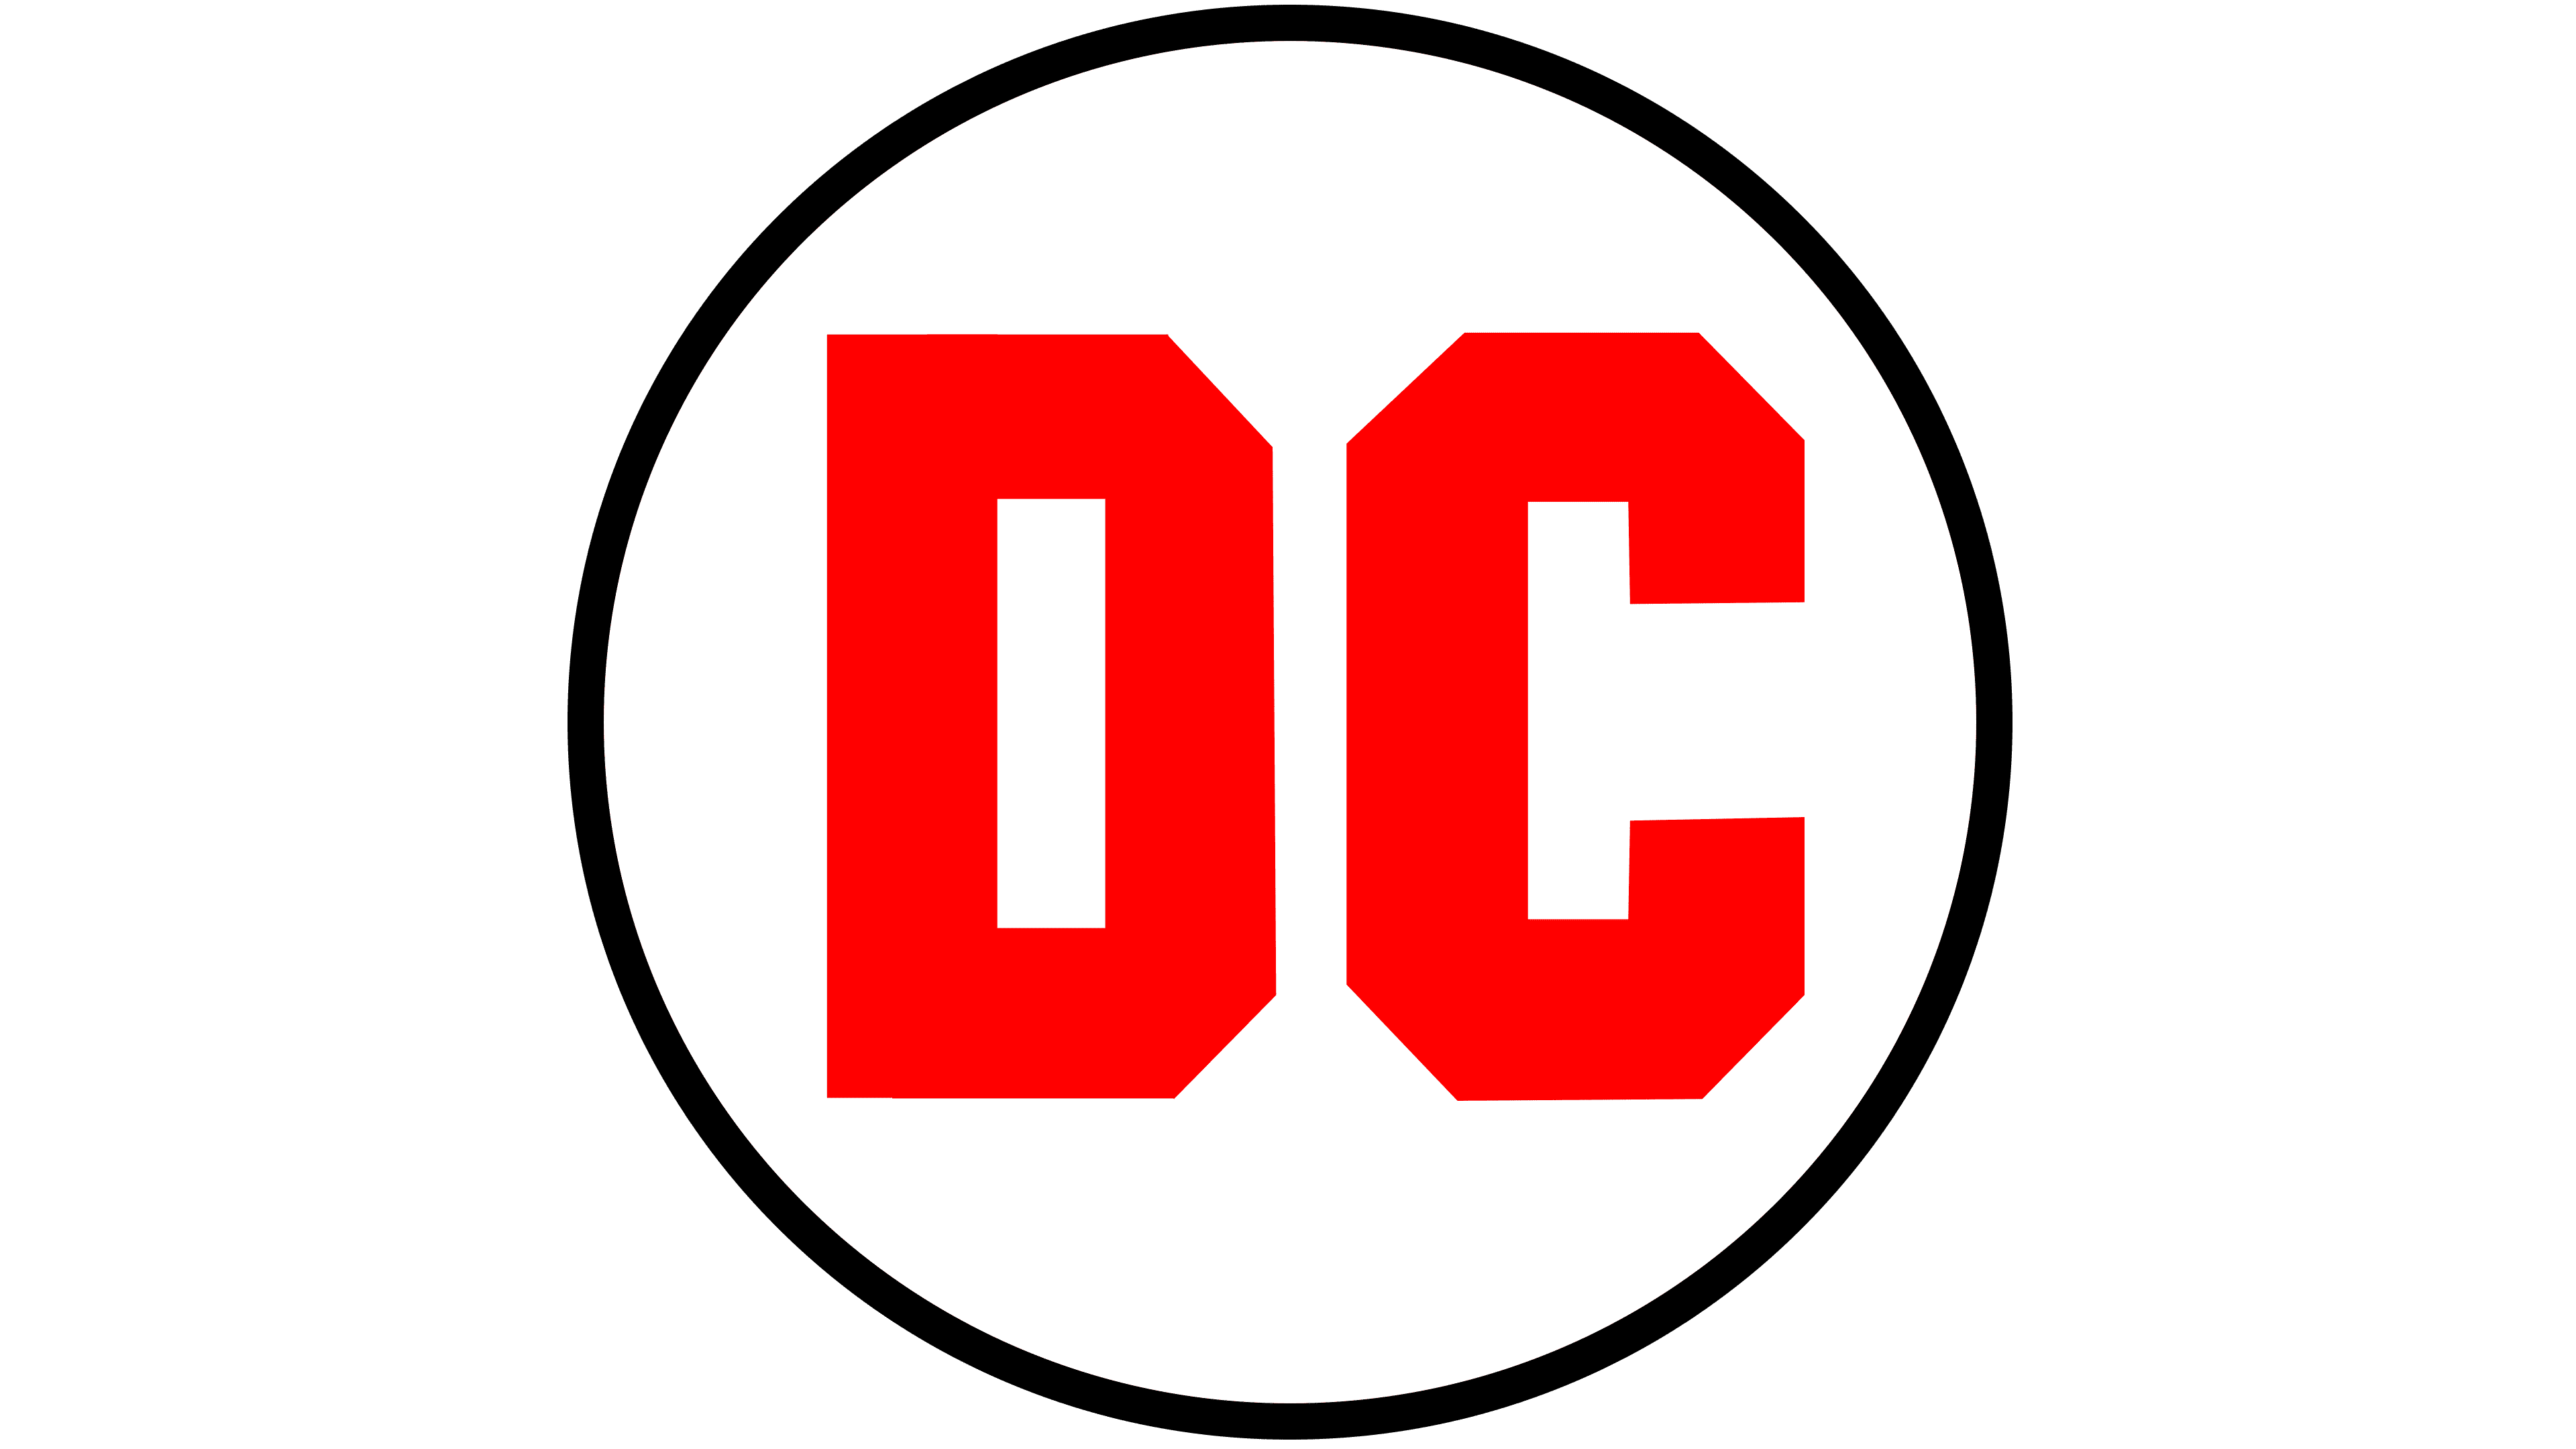 File:DC Comics logo.png - Wikipedia